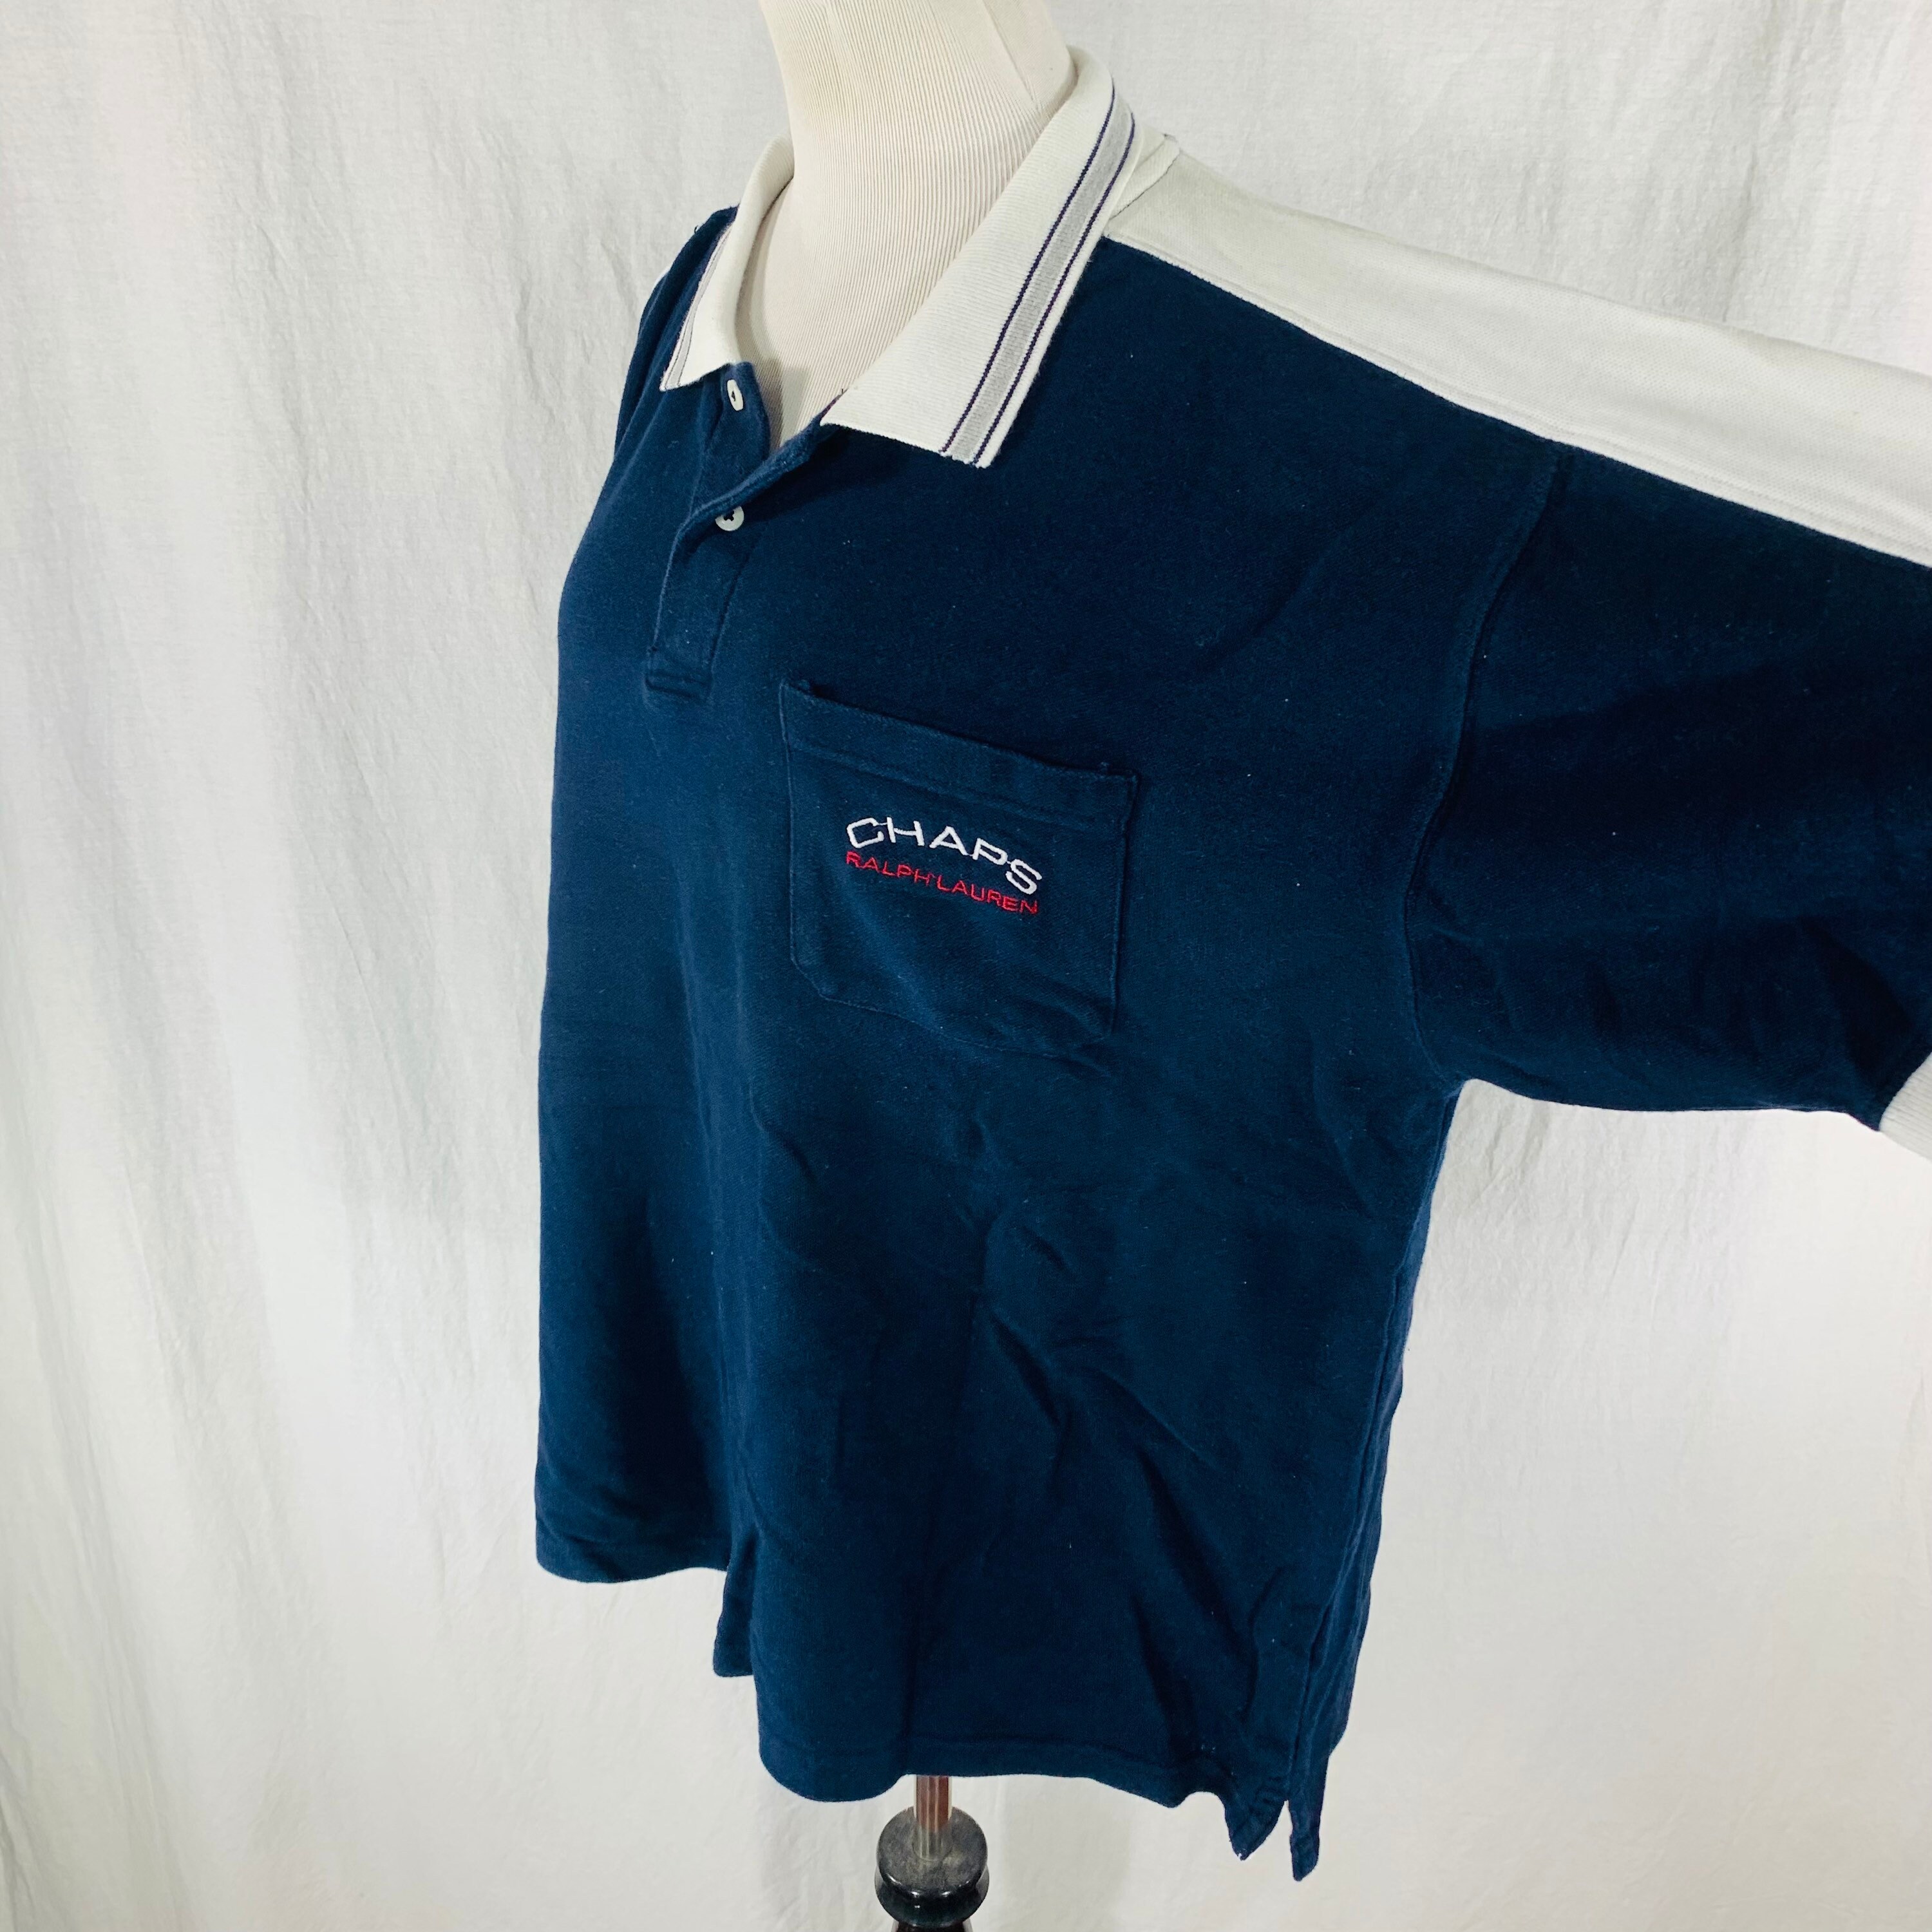 Vintage 90s Ralph Lauren CHAPS Embroidered Sailing Design Blue - Etsy